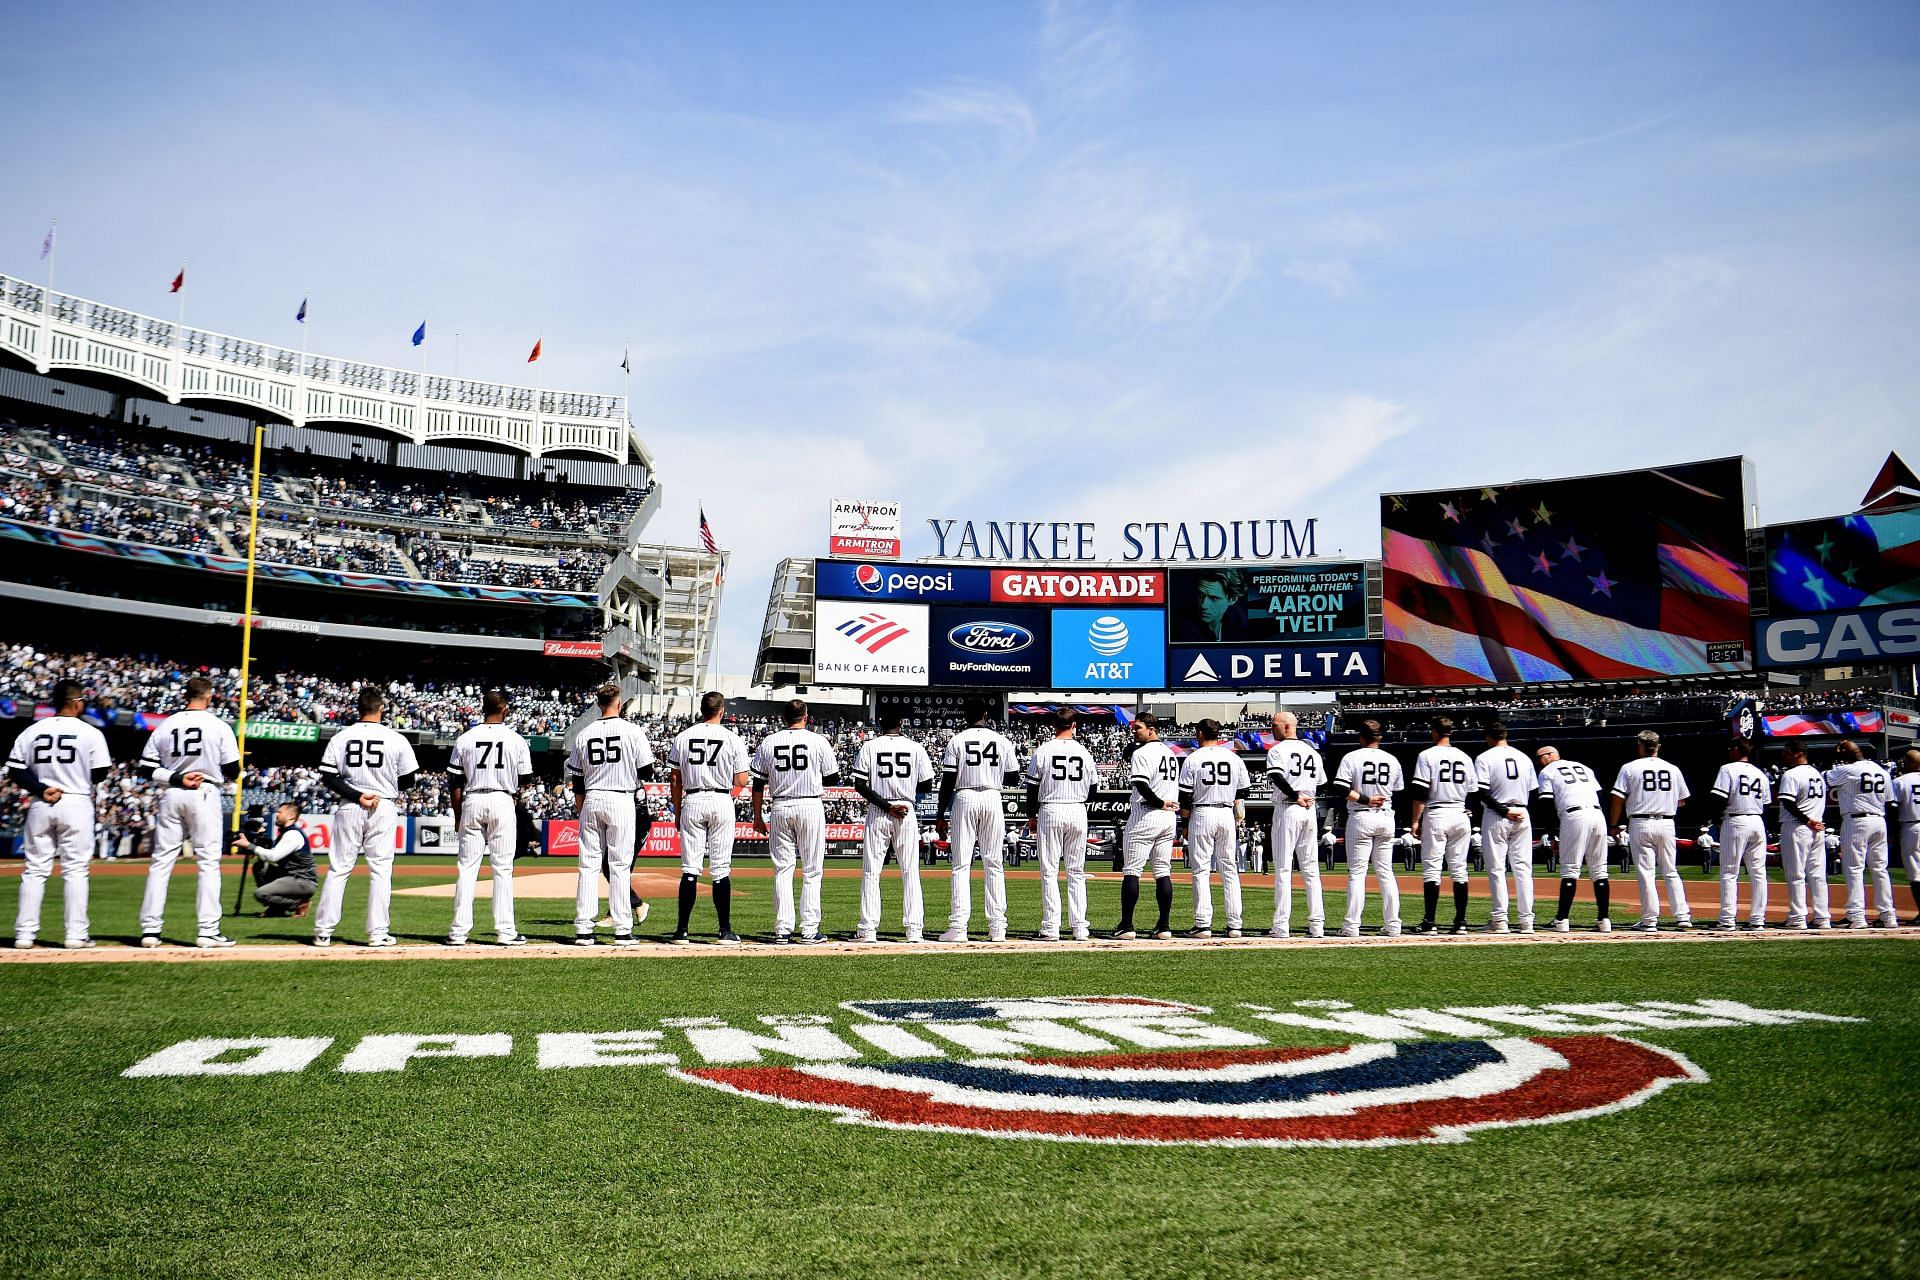 Yankee Stadium will host the opening game of the 2022 season